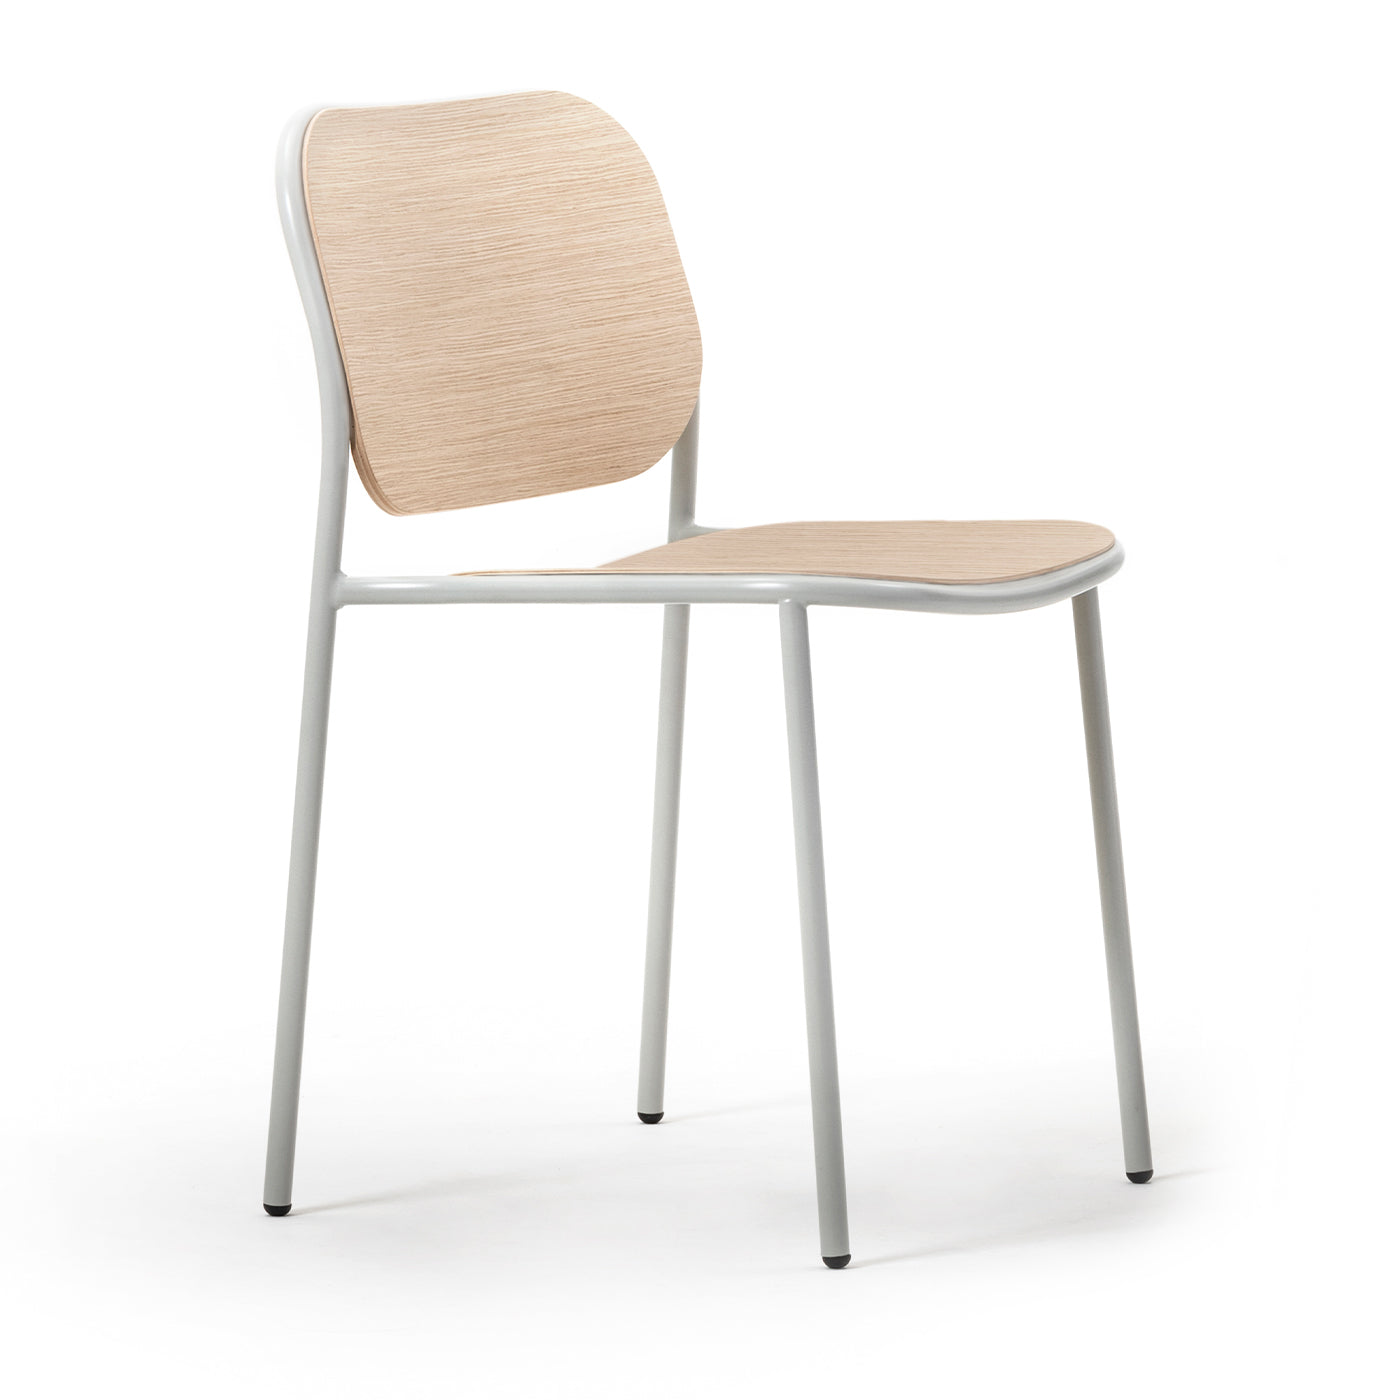 0175-LE Metis Beige/Light Oak Chair By Studio Gabbertas - Alternative view 1